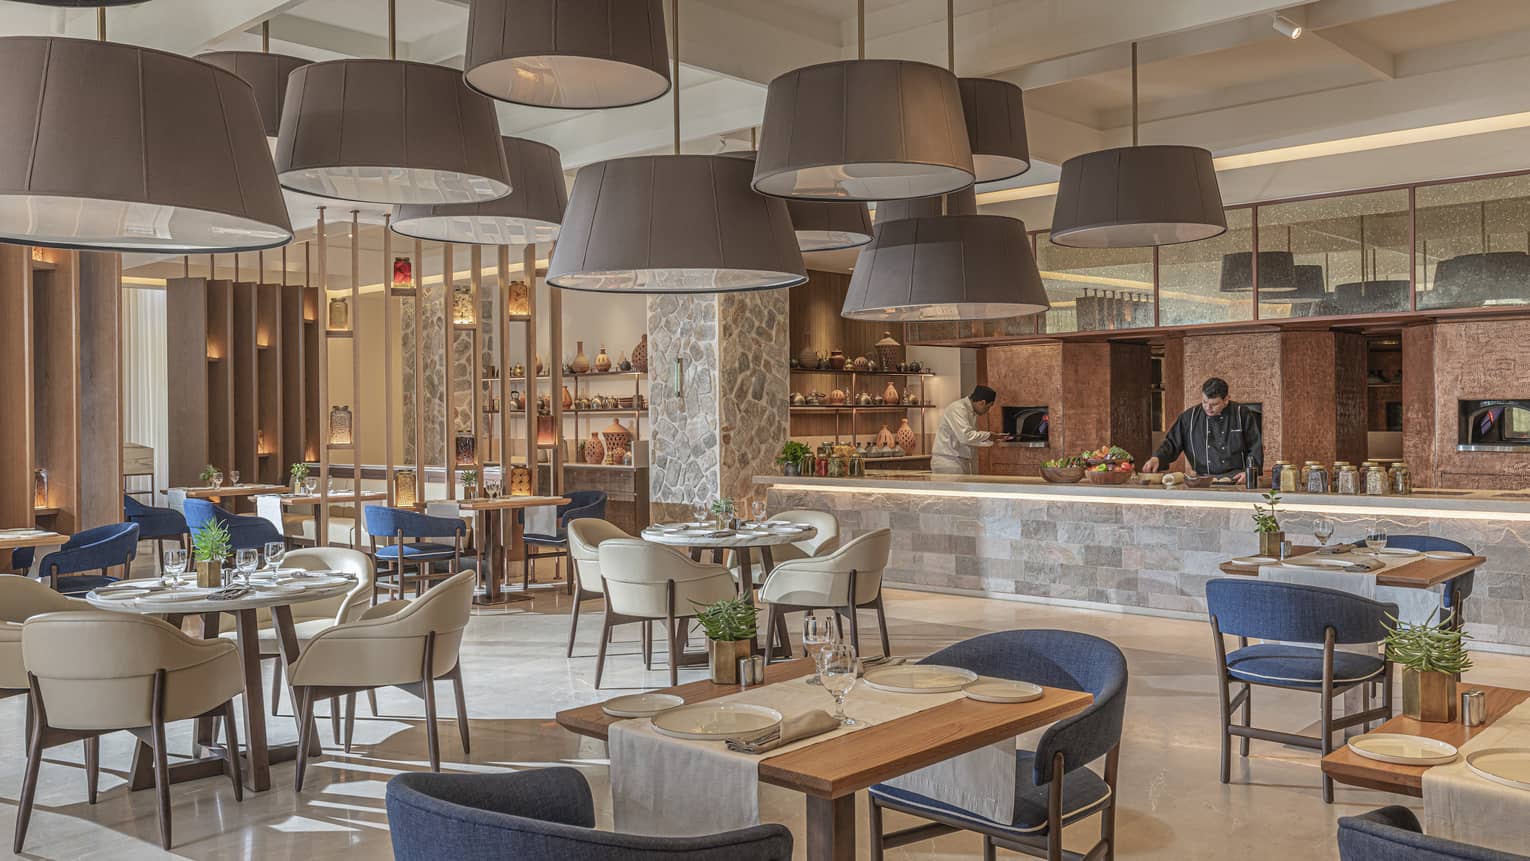 Zitouni restaurant with domed overhead lighting, granite bar, intimate seating, natural light